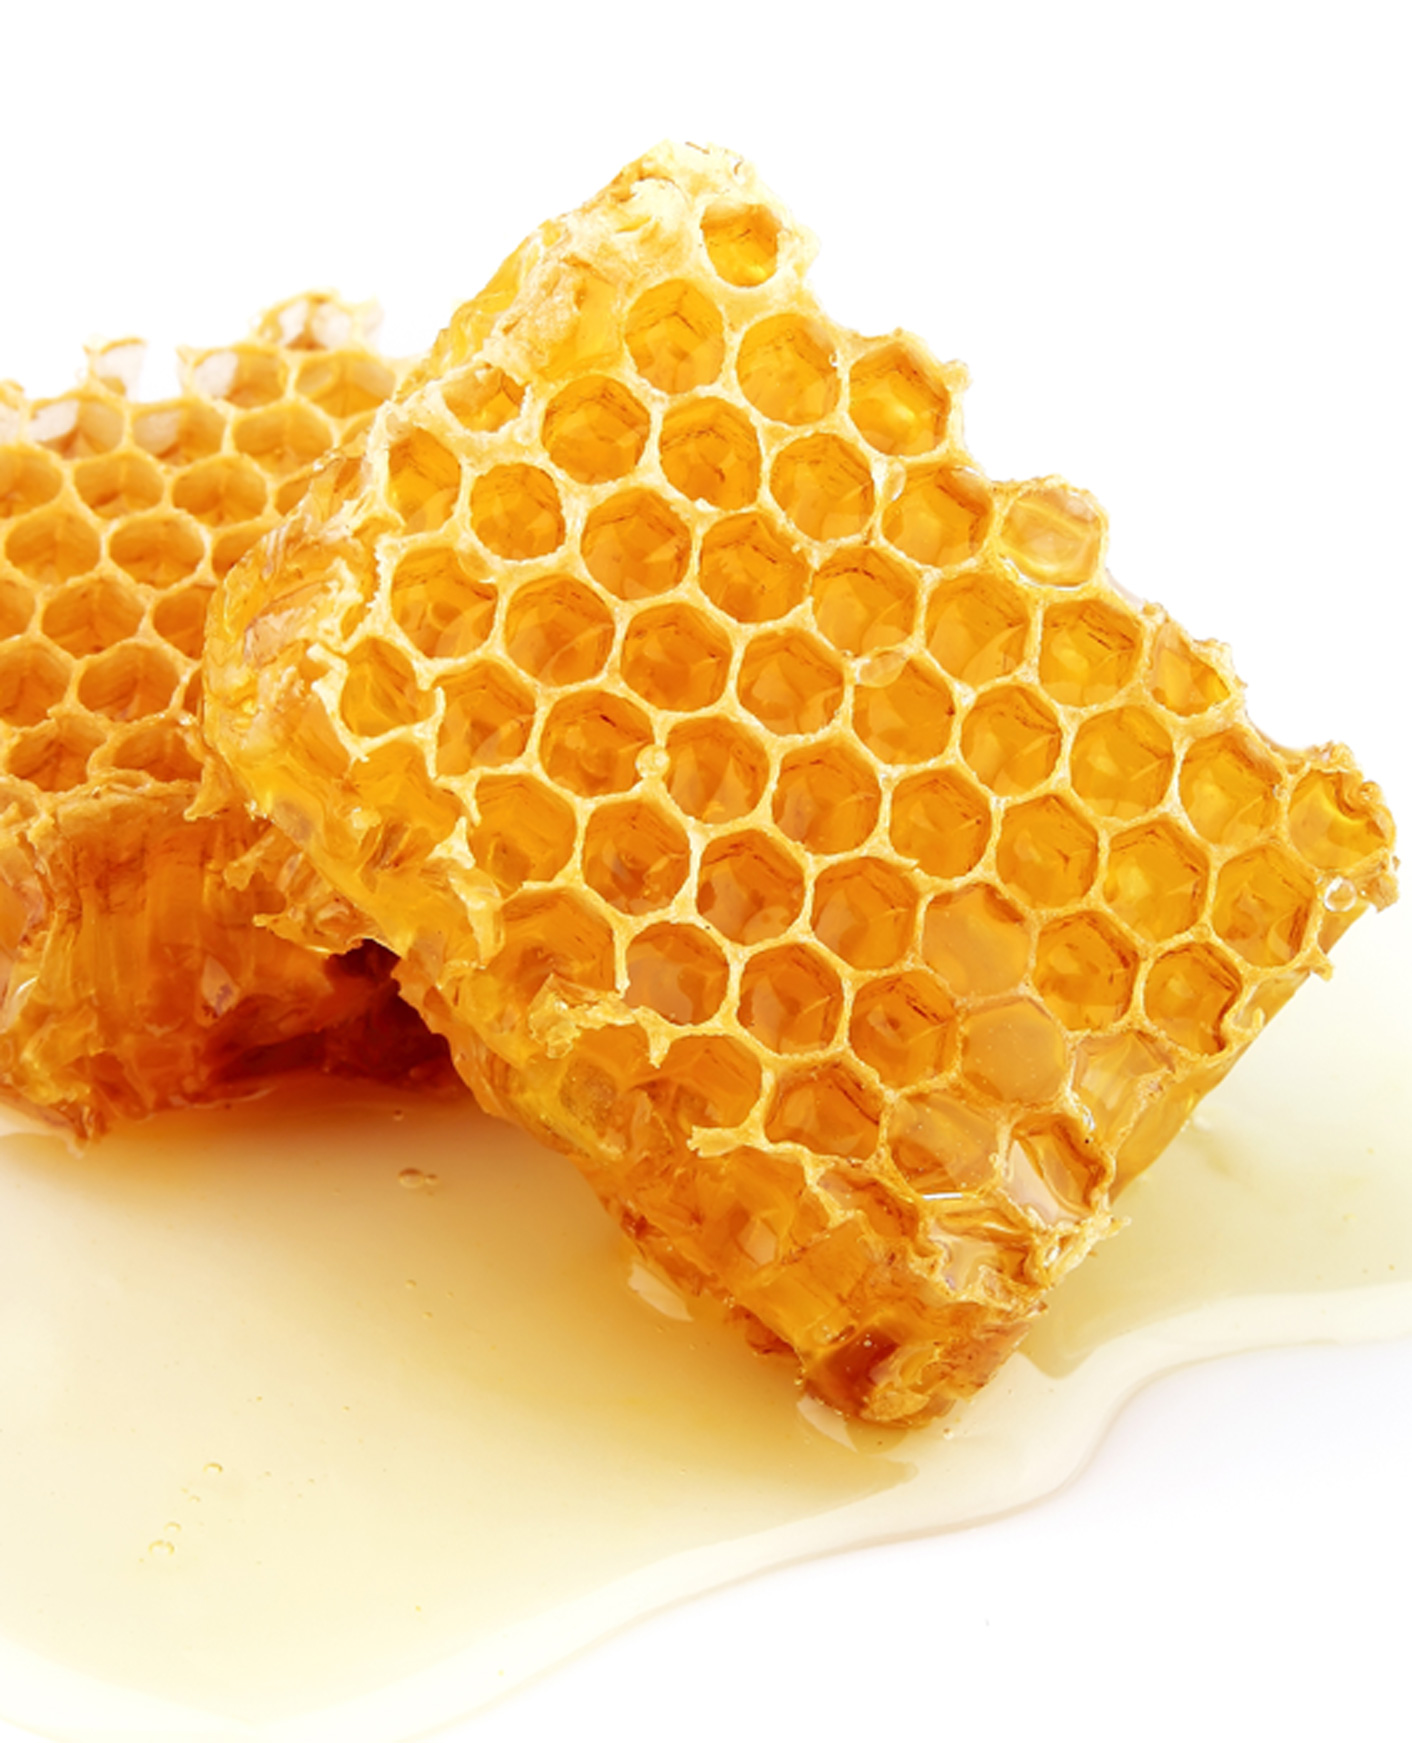 honeycombs